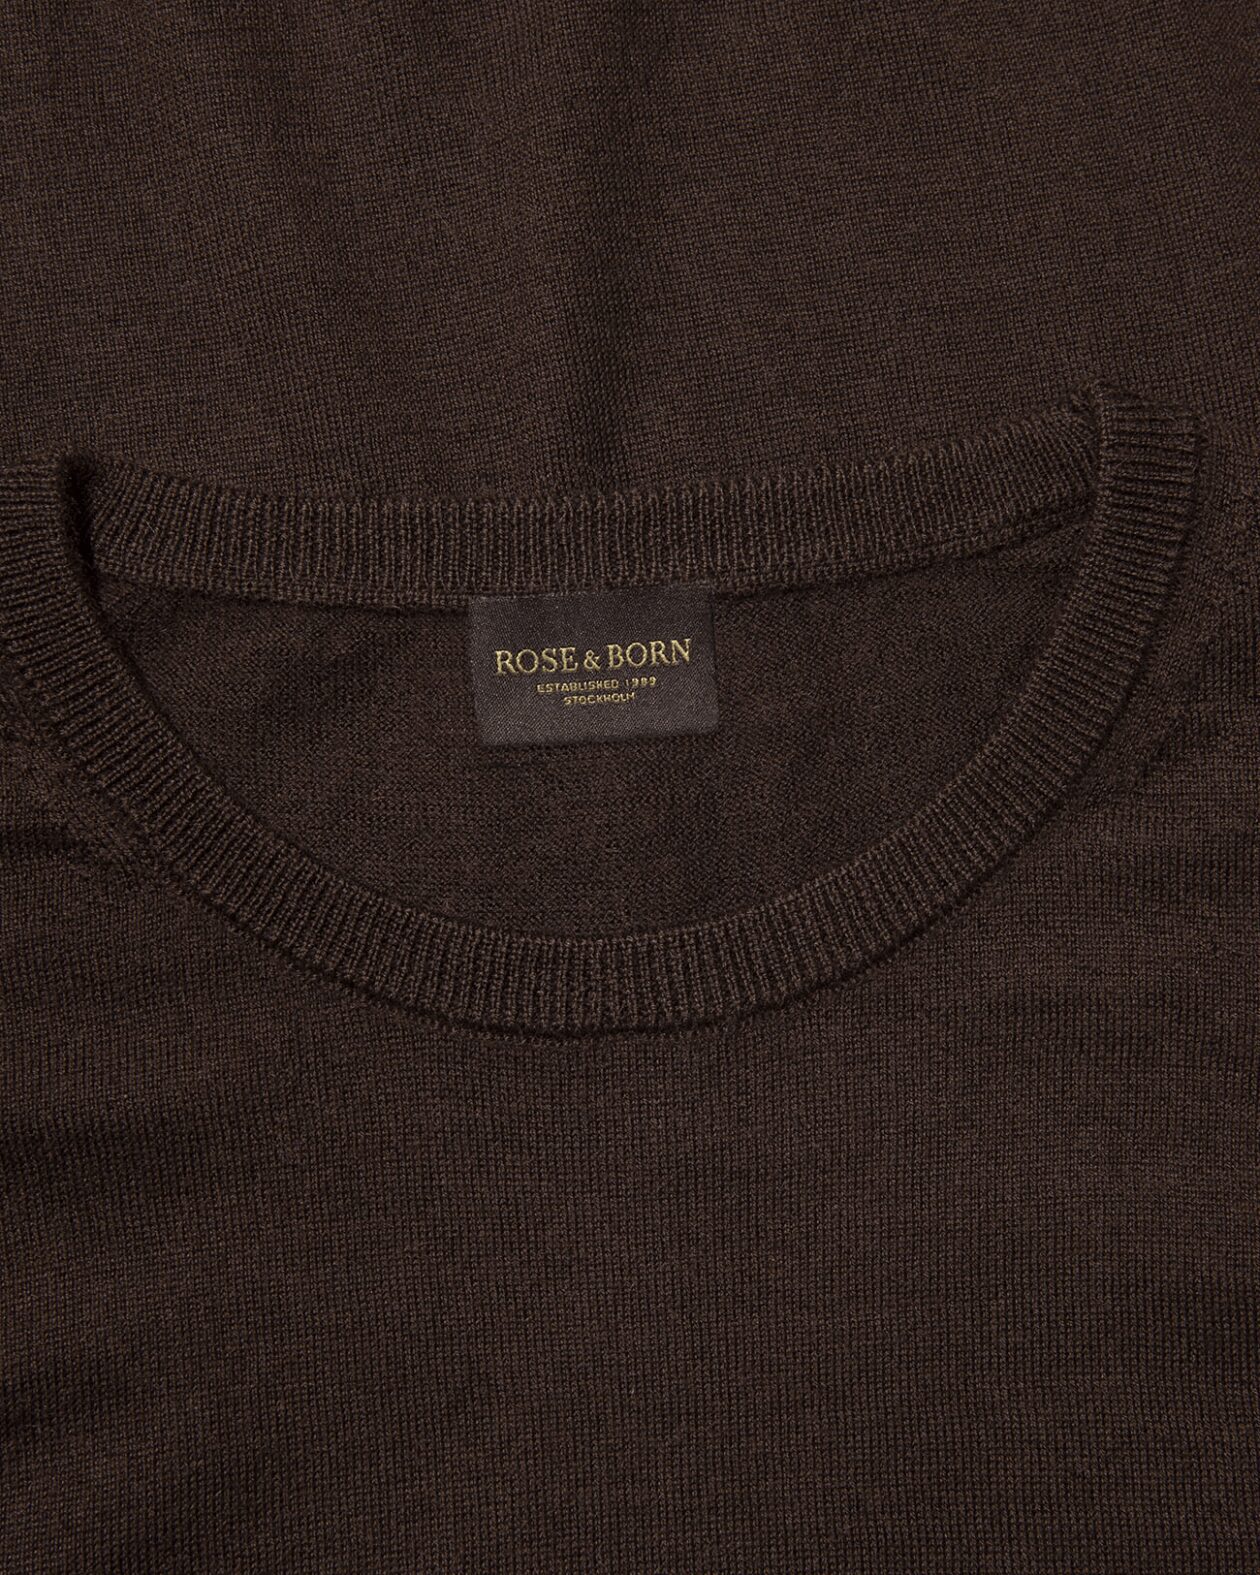 Brown Crew Neck Cashmere Sweater